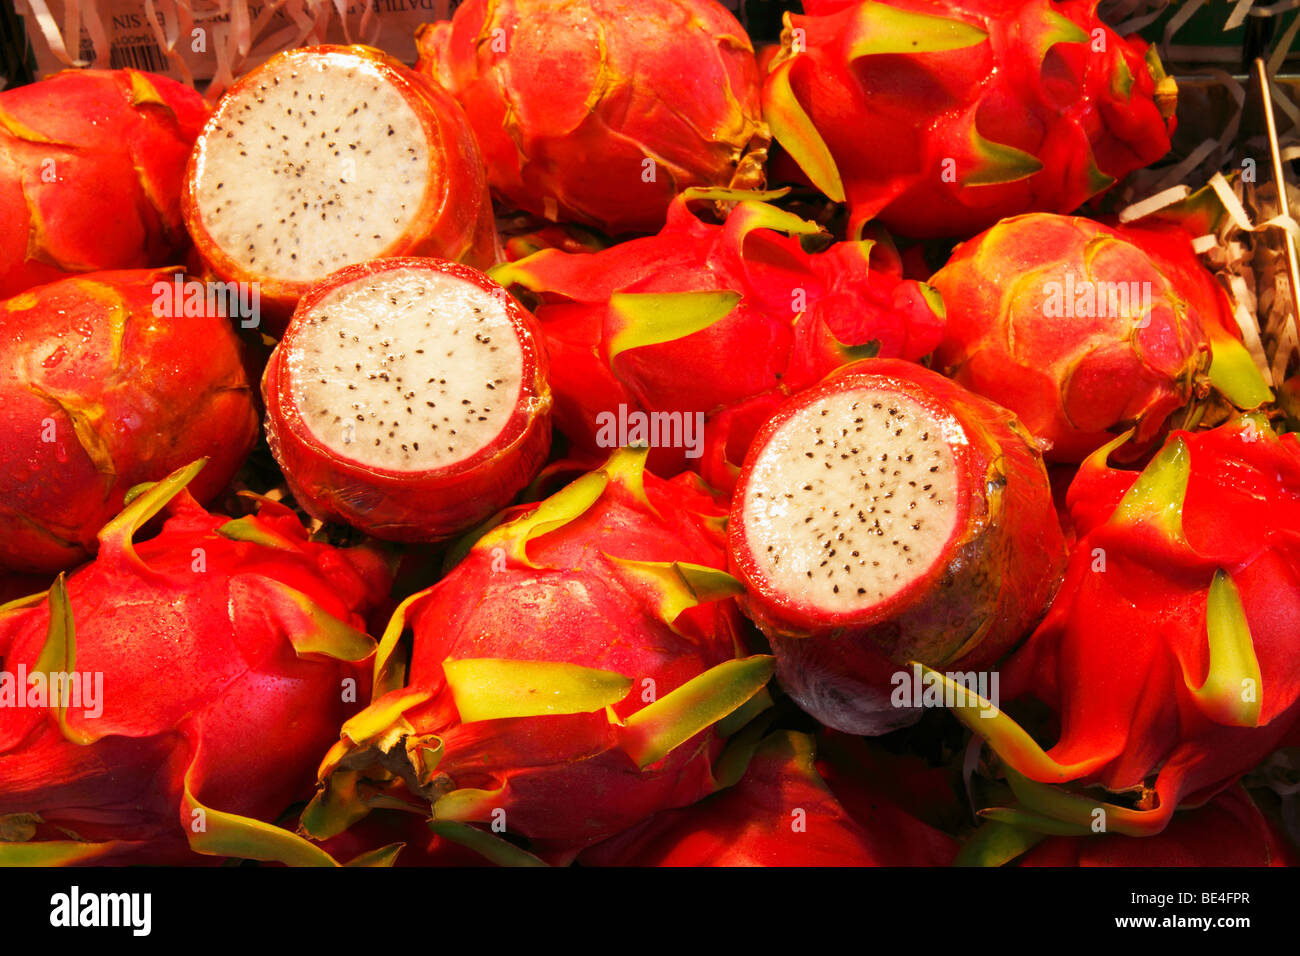 Dragon fruit (Pitaya) on market stall in Spain Stock Photo